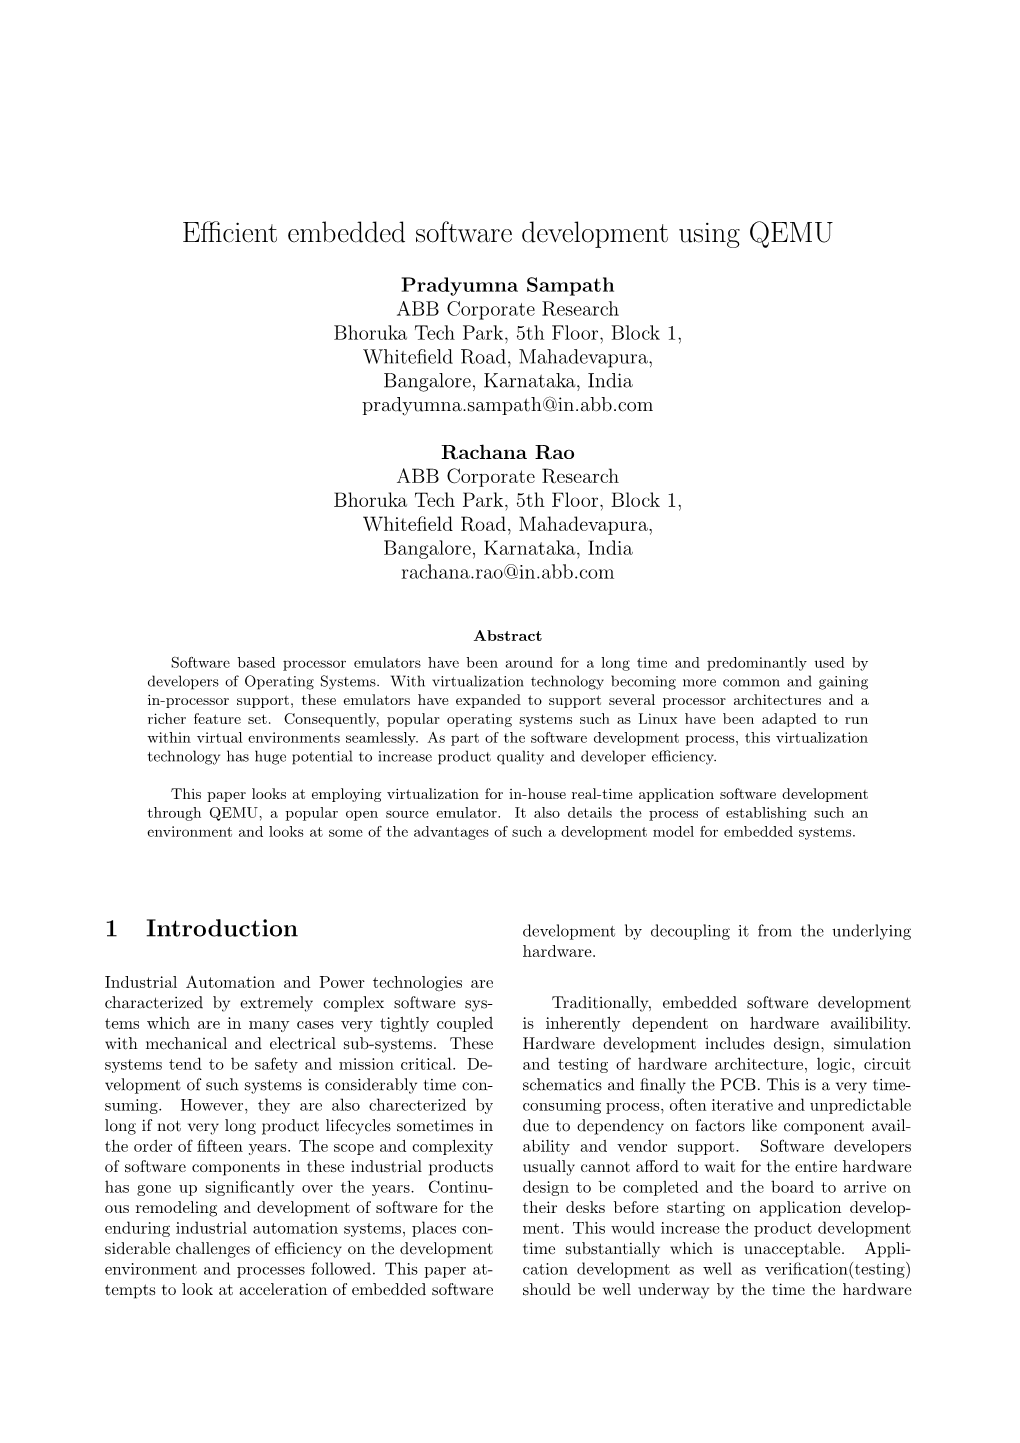 Efficient Embedded Software Development Using QEMU